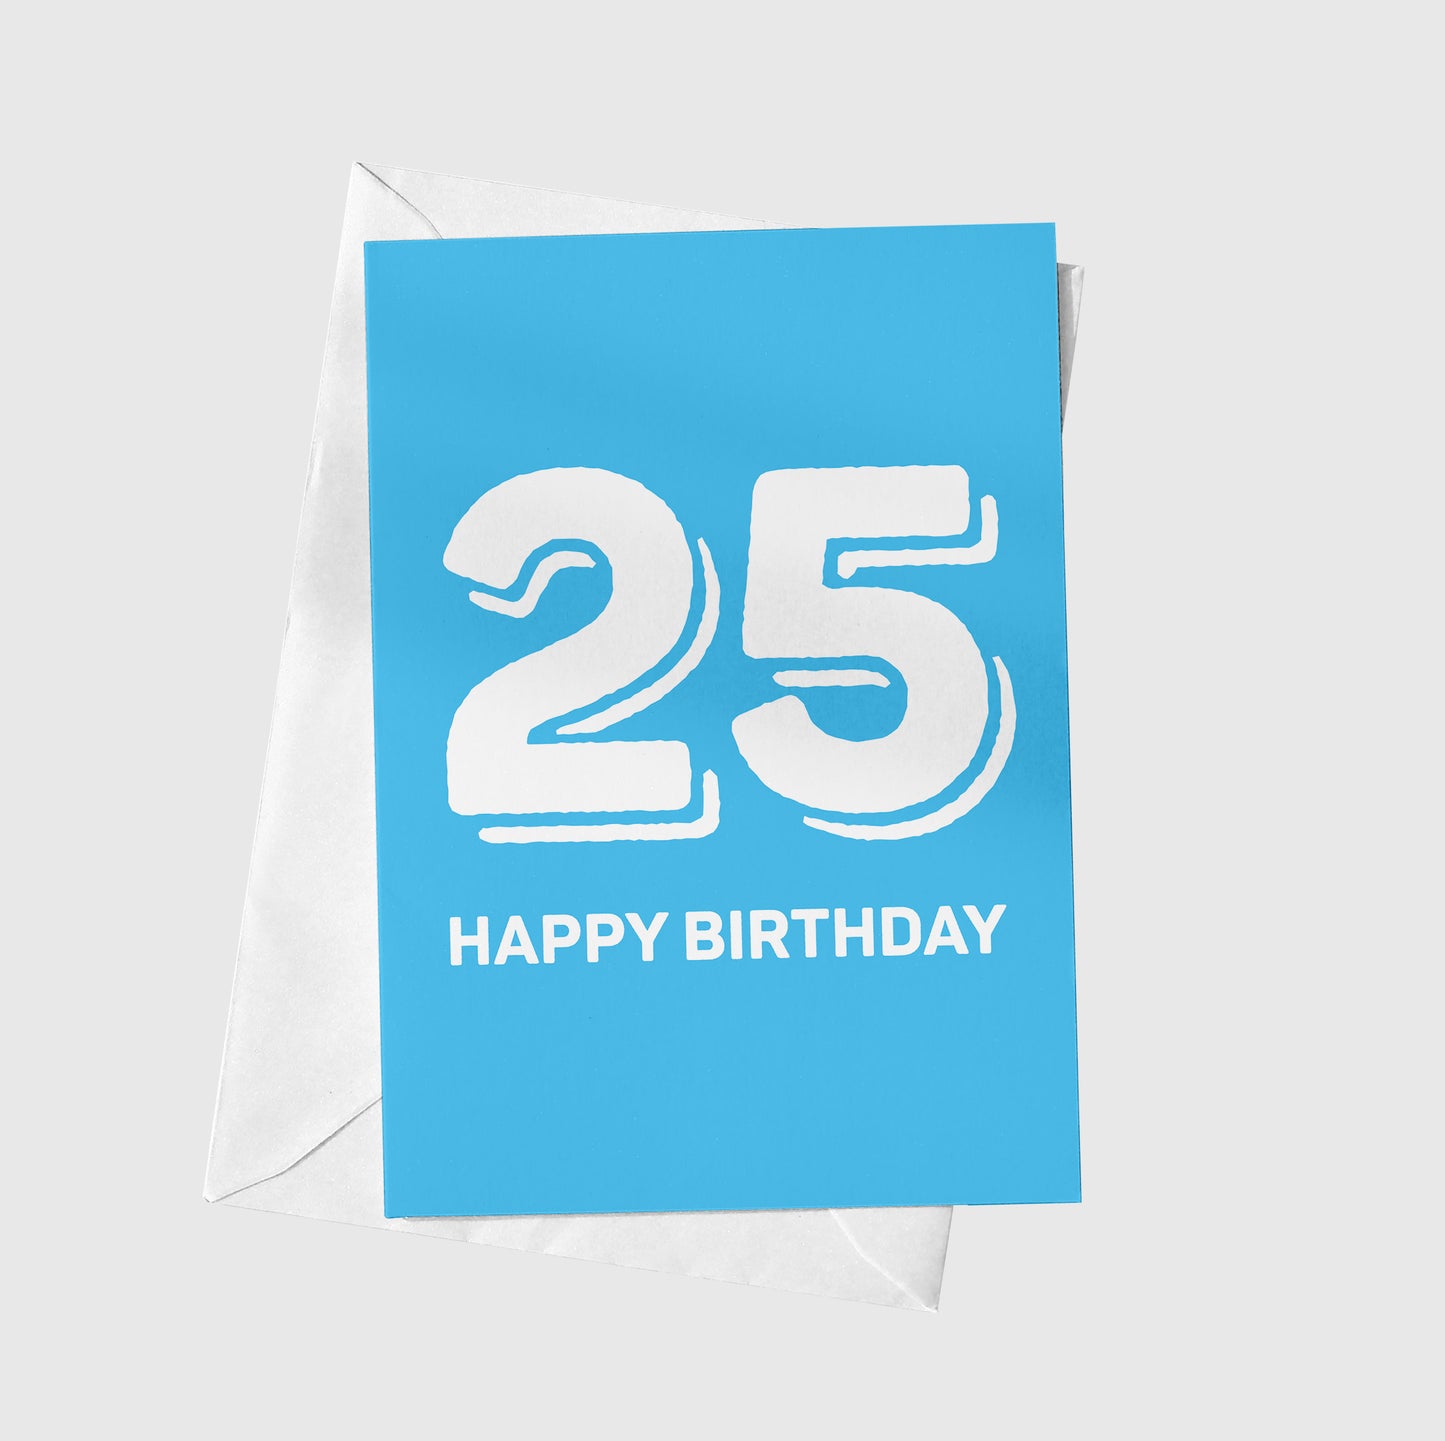 25th Birthday